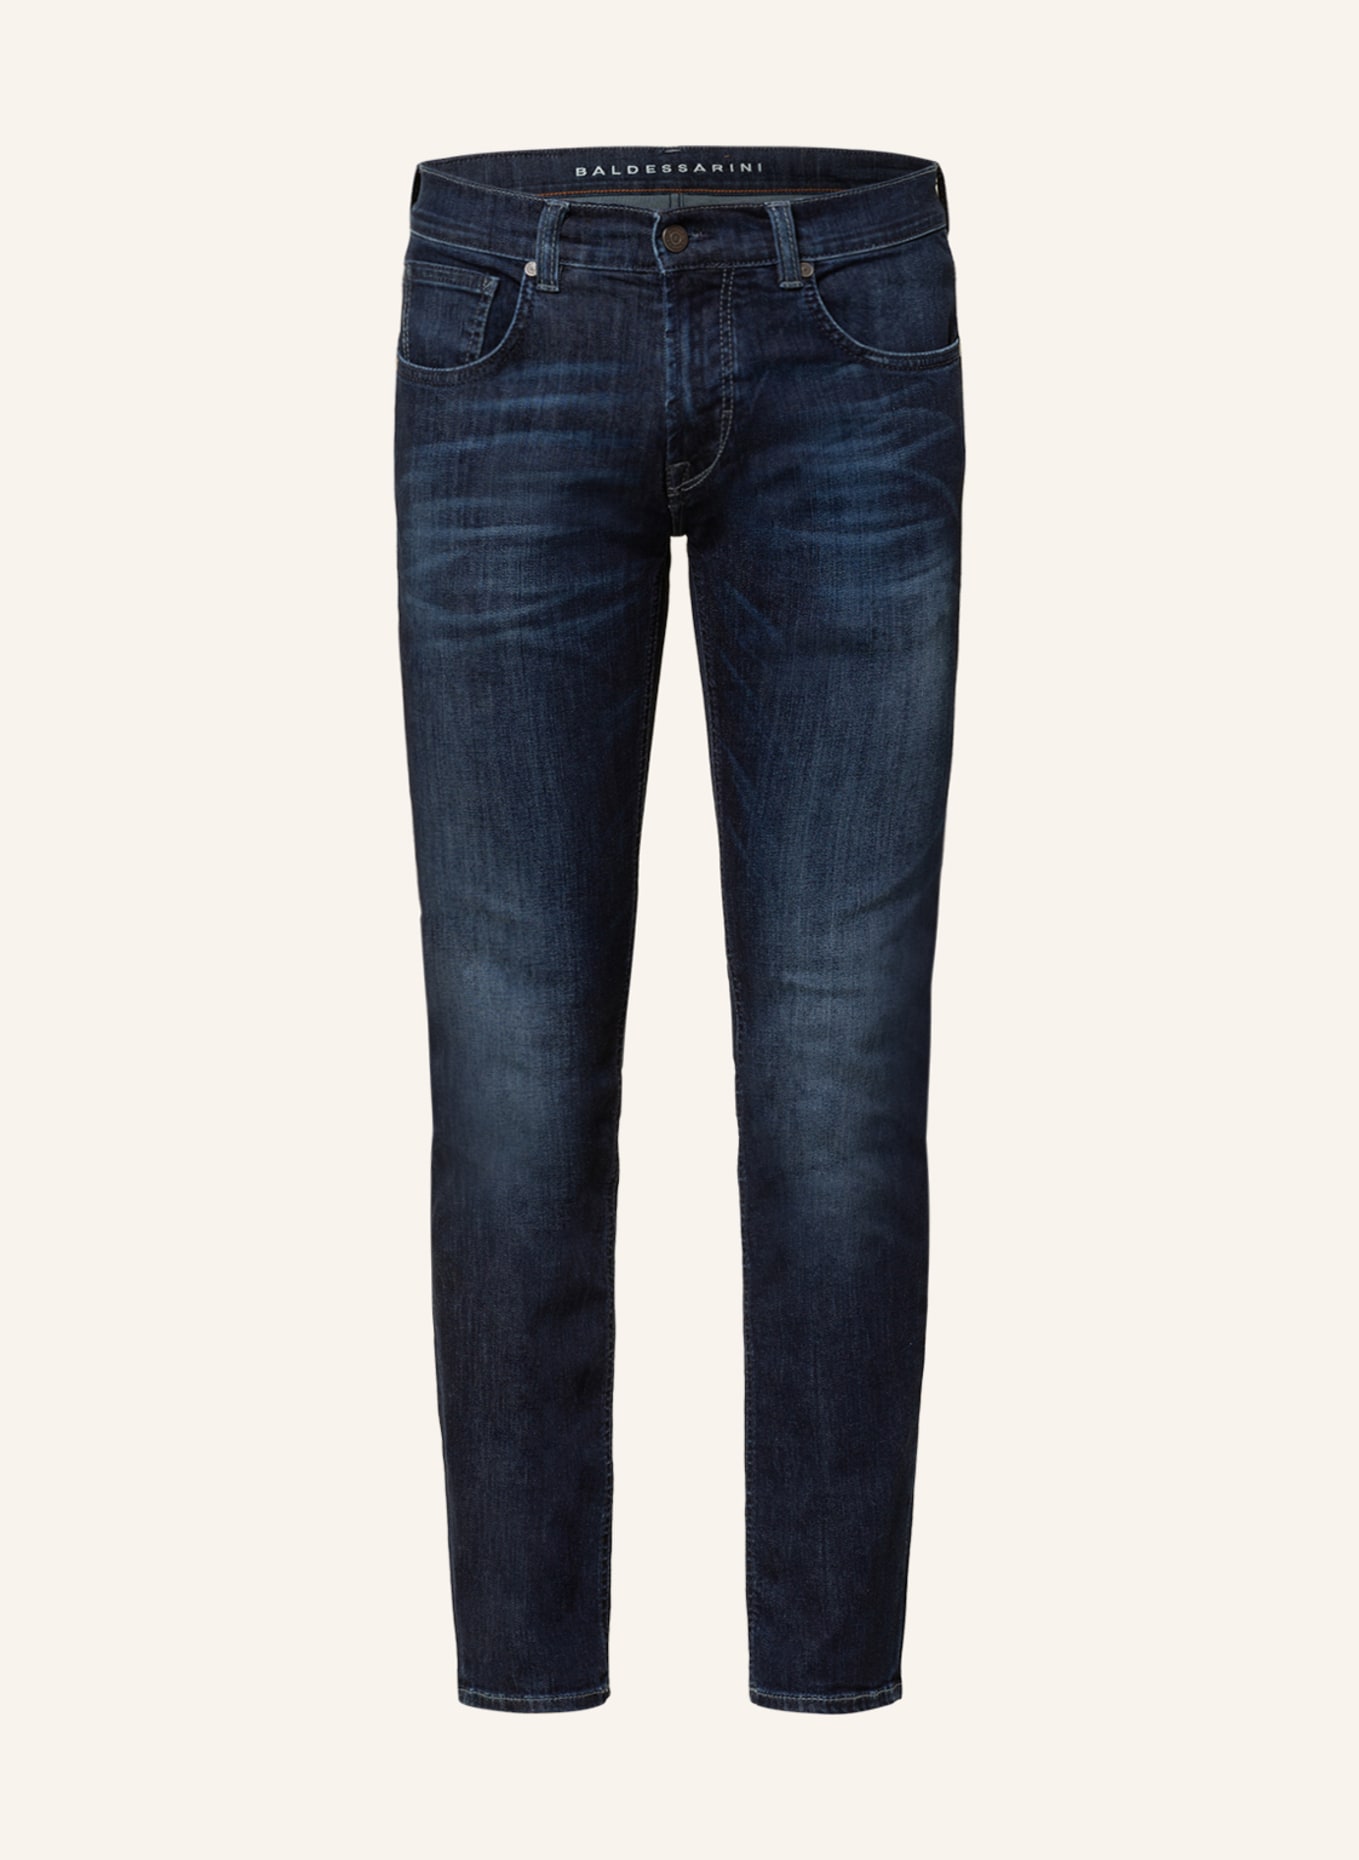 BALDESSARINI Jeans Regular Fit, Color: 6814 dark blue used buffies (Image 1)